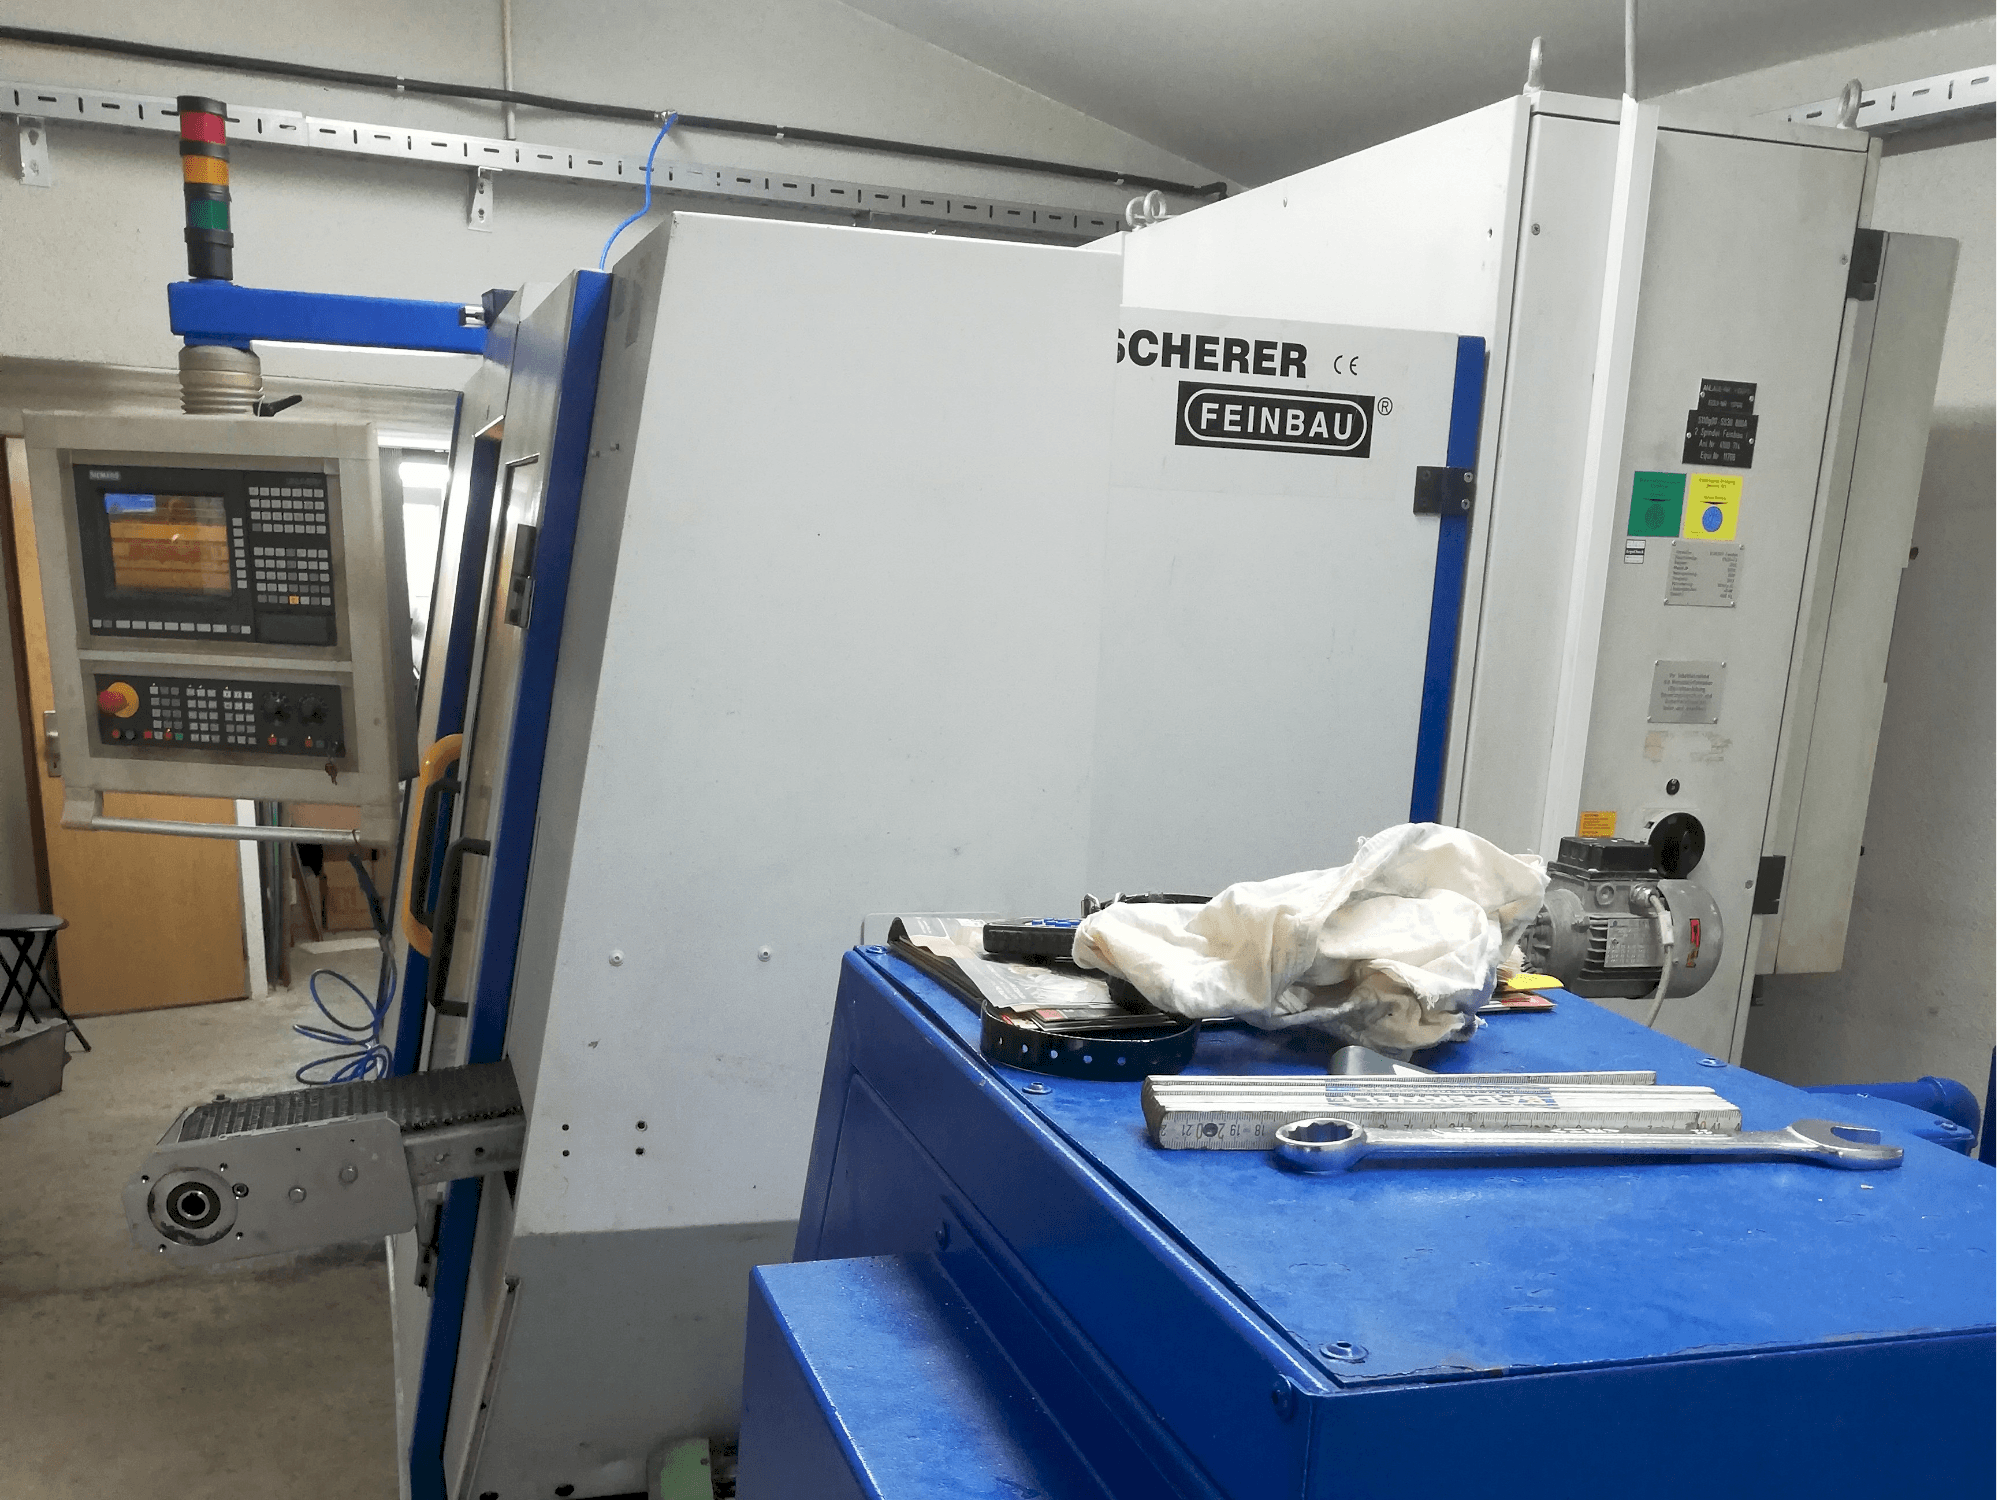 Vooraanzicht  van Scherer - Feinbau CNC244/2  machine